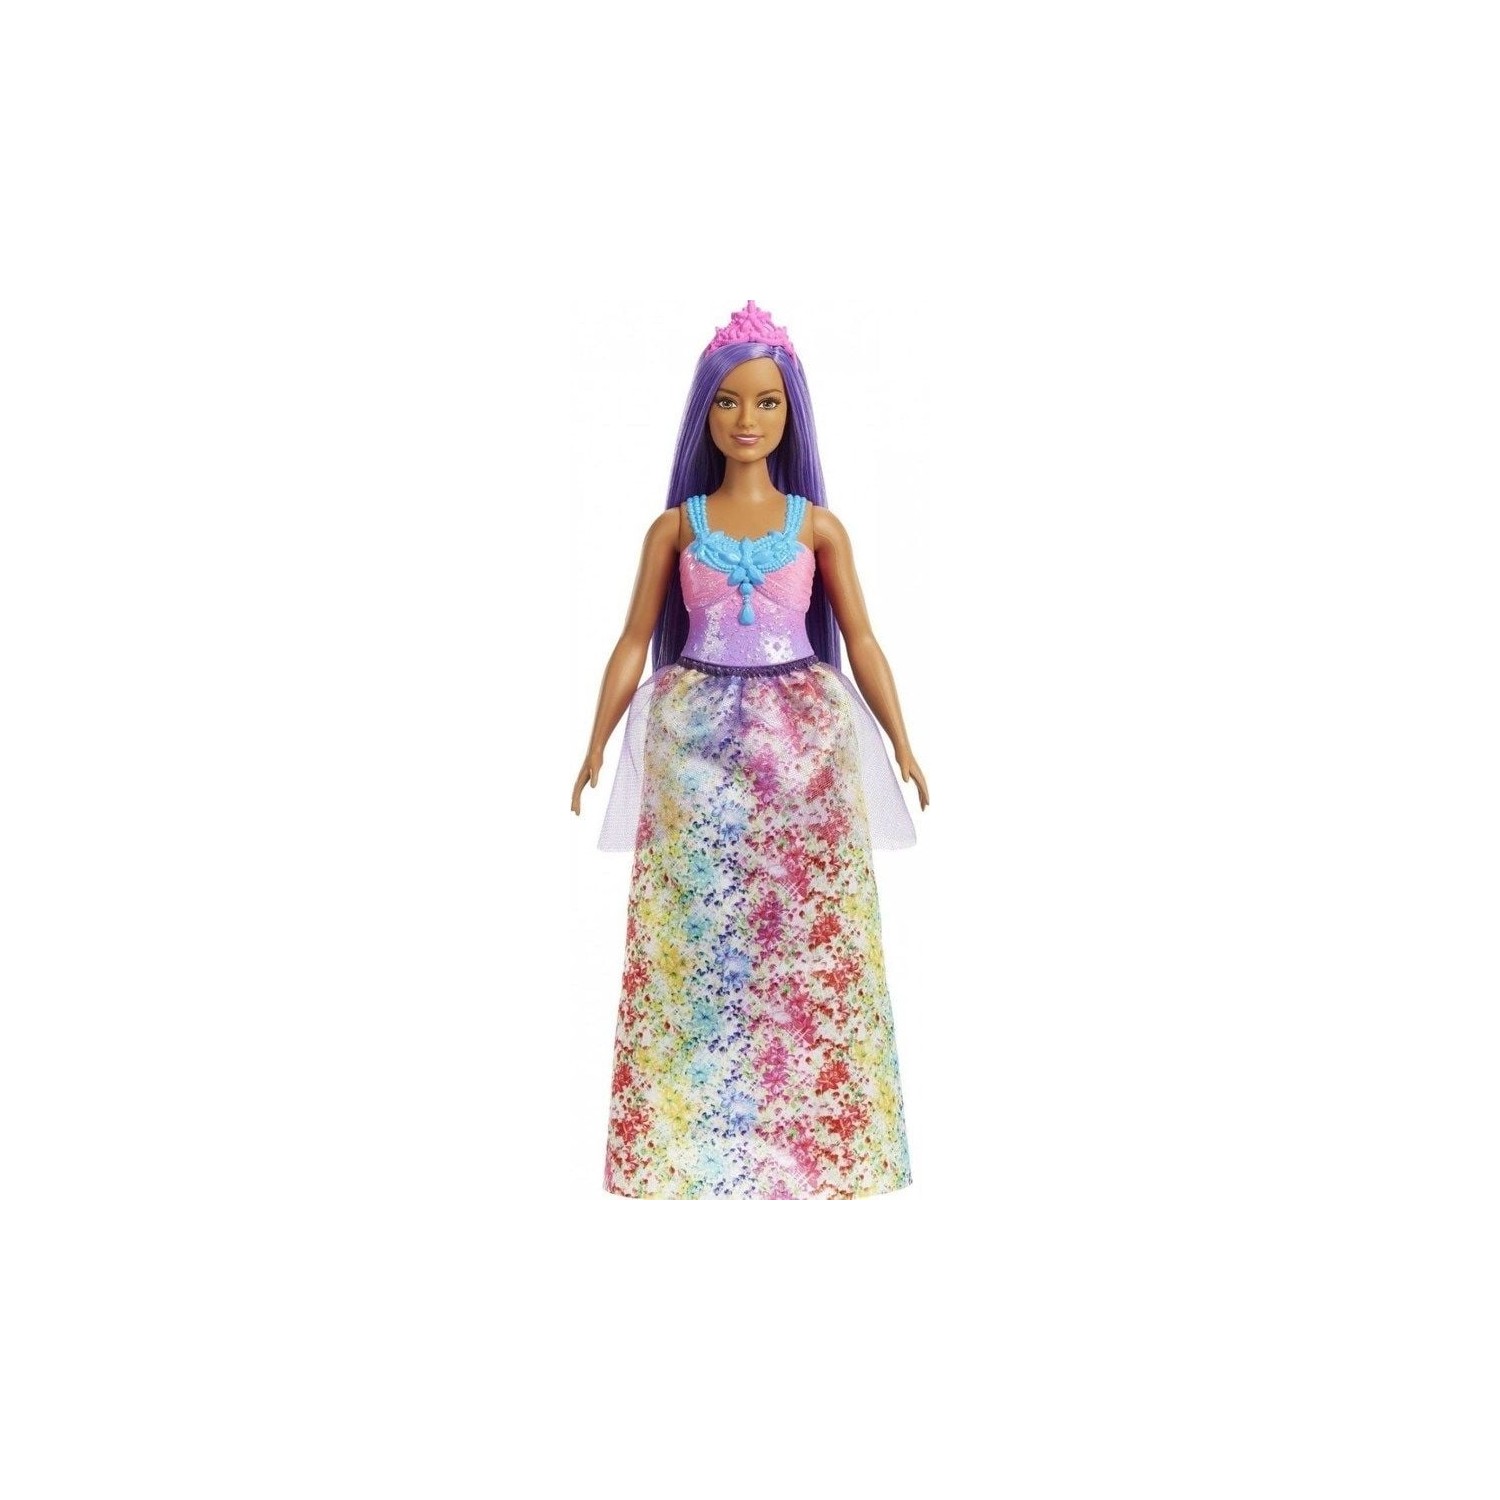 Кукла Barbie Dreamtopia Princess Dolls HGR16 кукла barbie dreamtopia long hair dolls gtf37